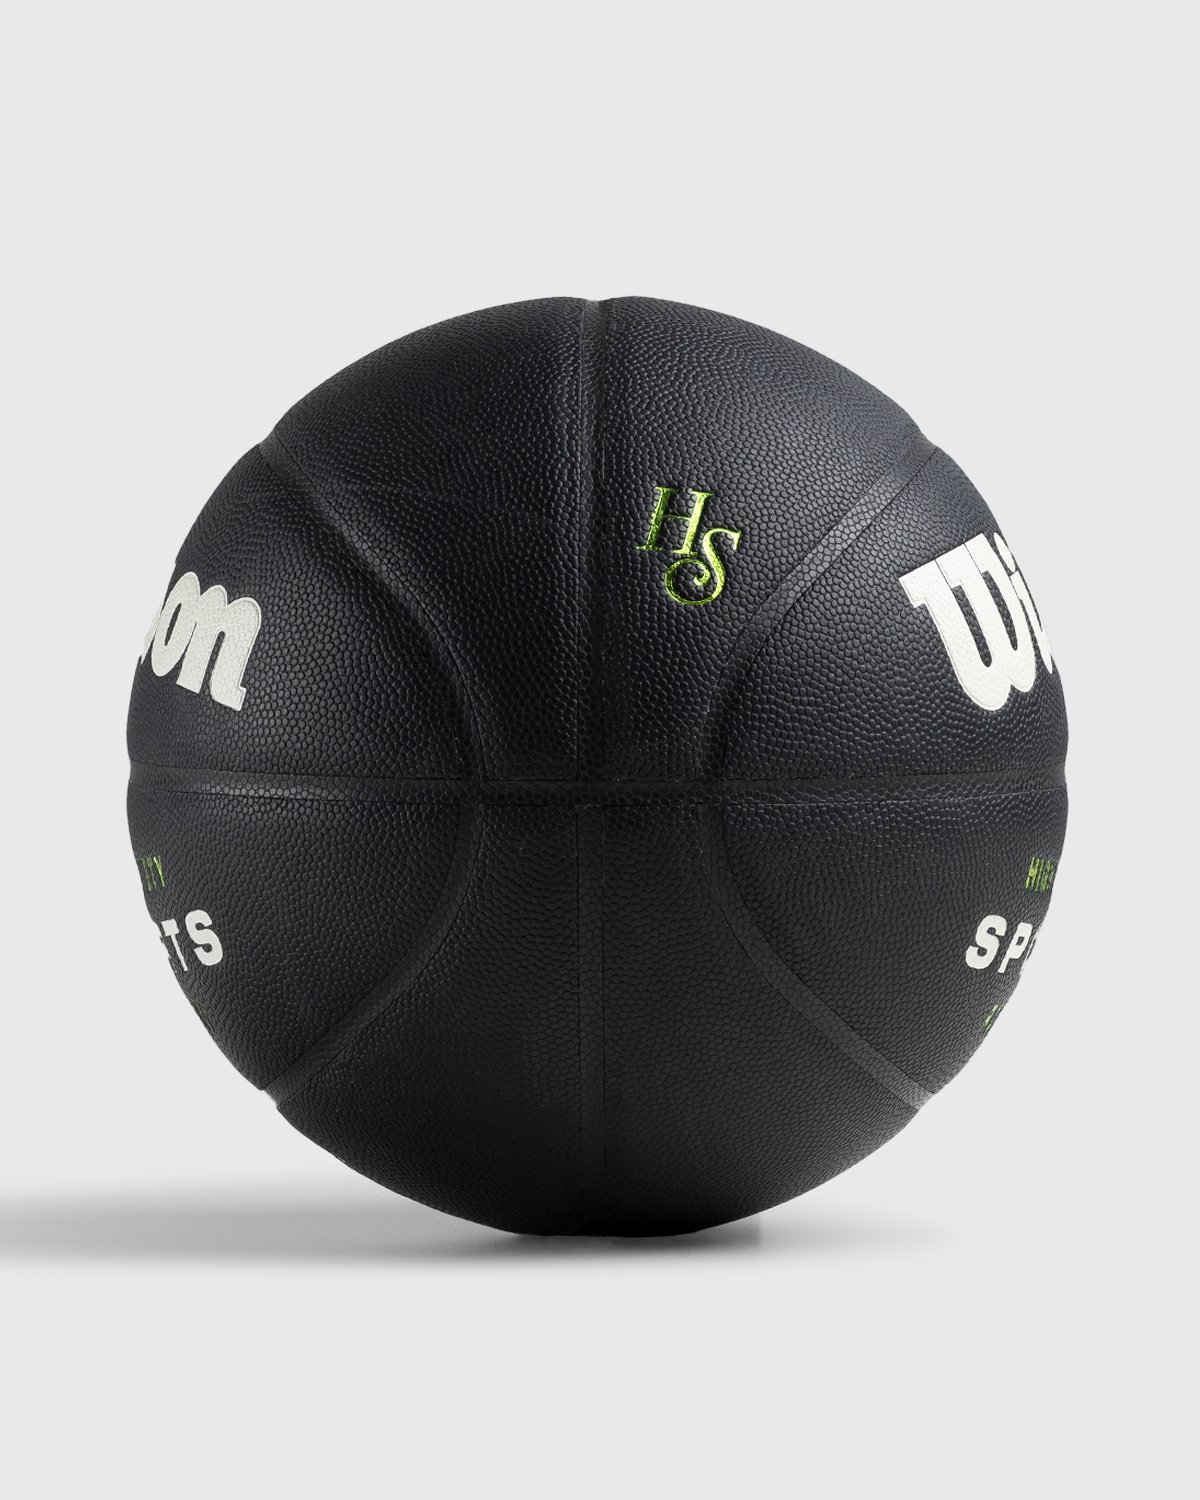 Wilson x Highsnobiety - HS Sports Basketball Black - Lifestyle - Black - Image 2